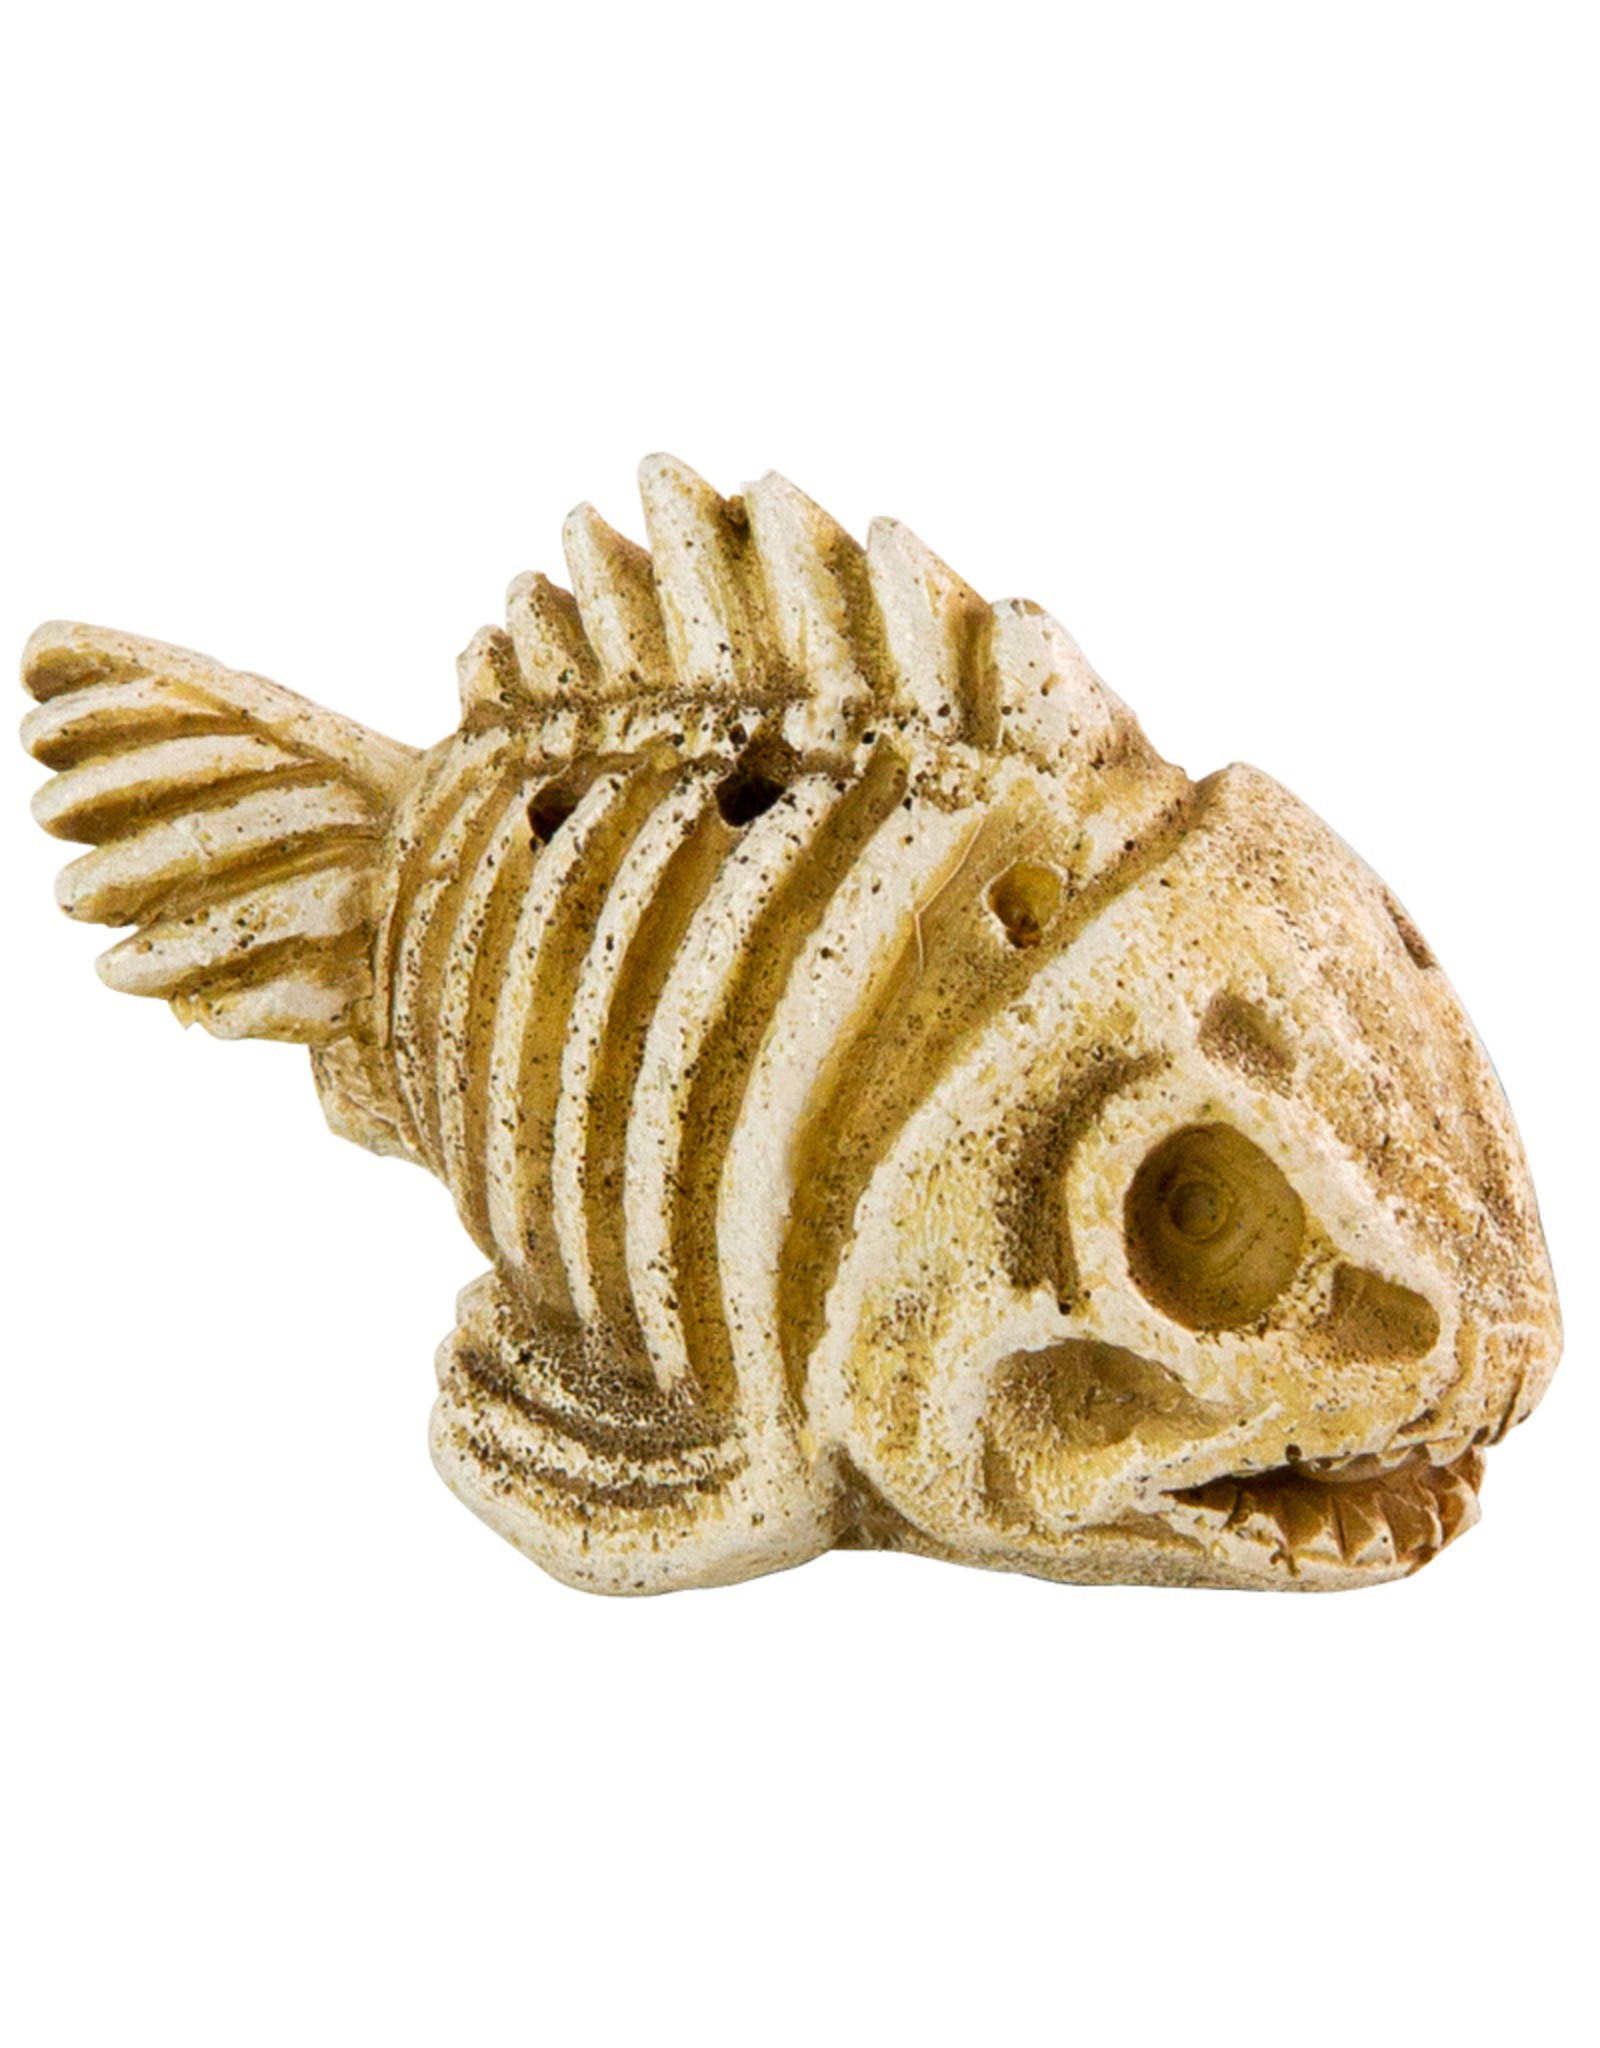 Burgham Aqua-Fit AQUA-FIT Fish Skeleton 3x1.5x2"